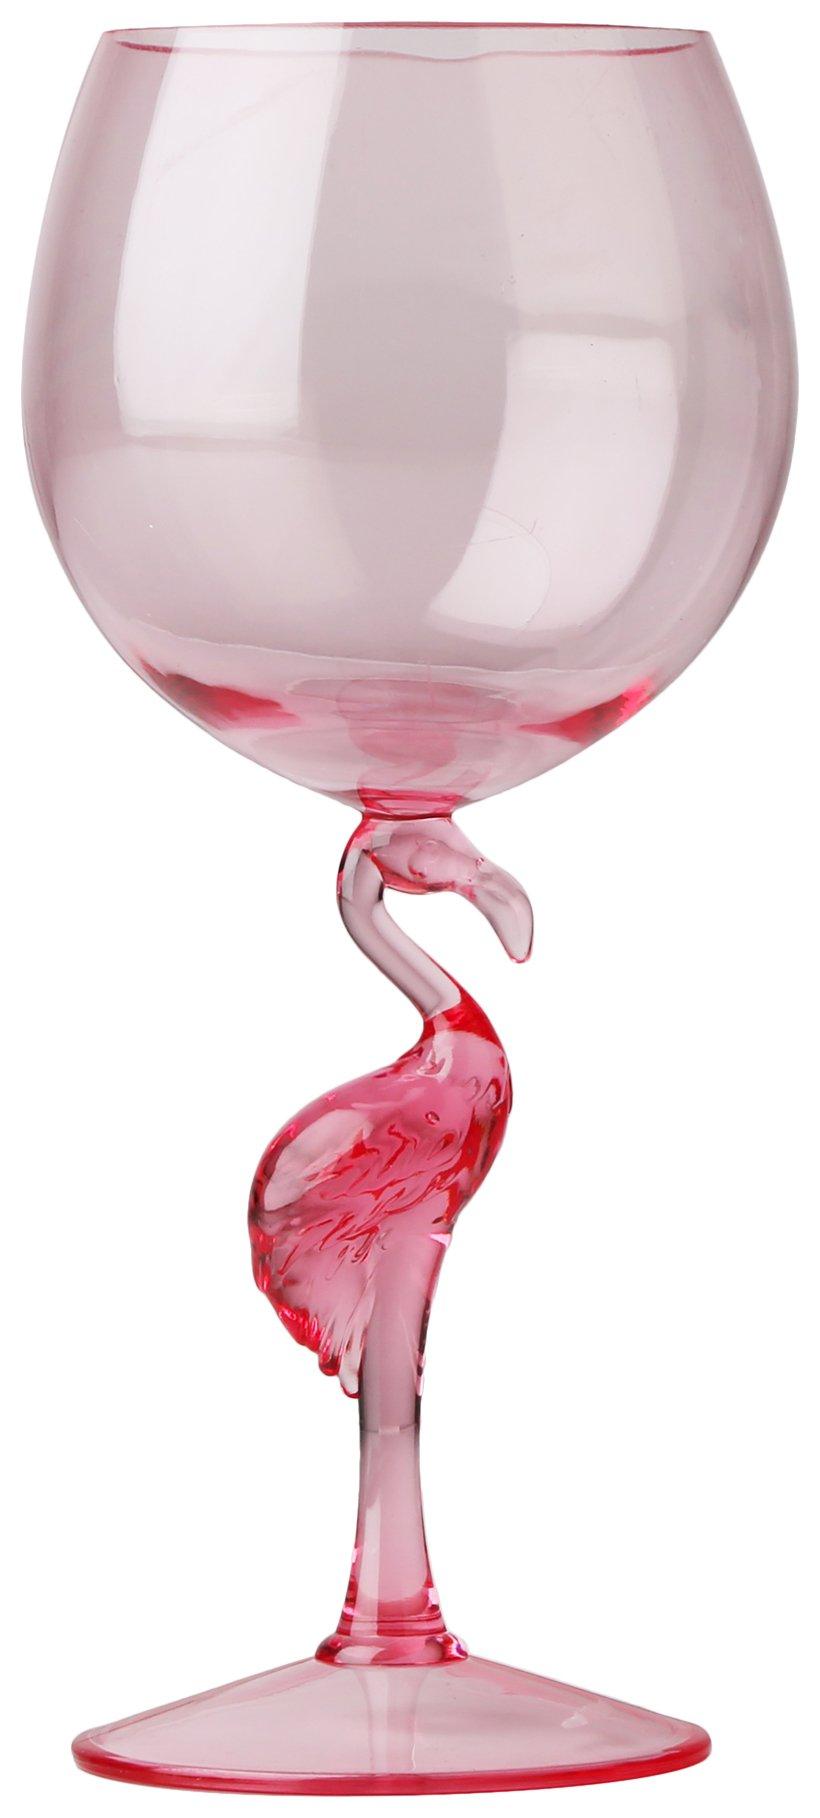 Core Home 18 oz. Acrylic Flamingo Wine Glass